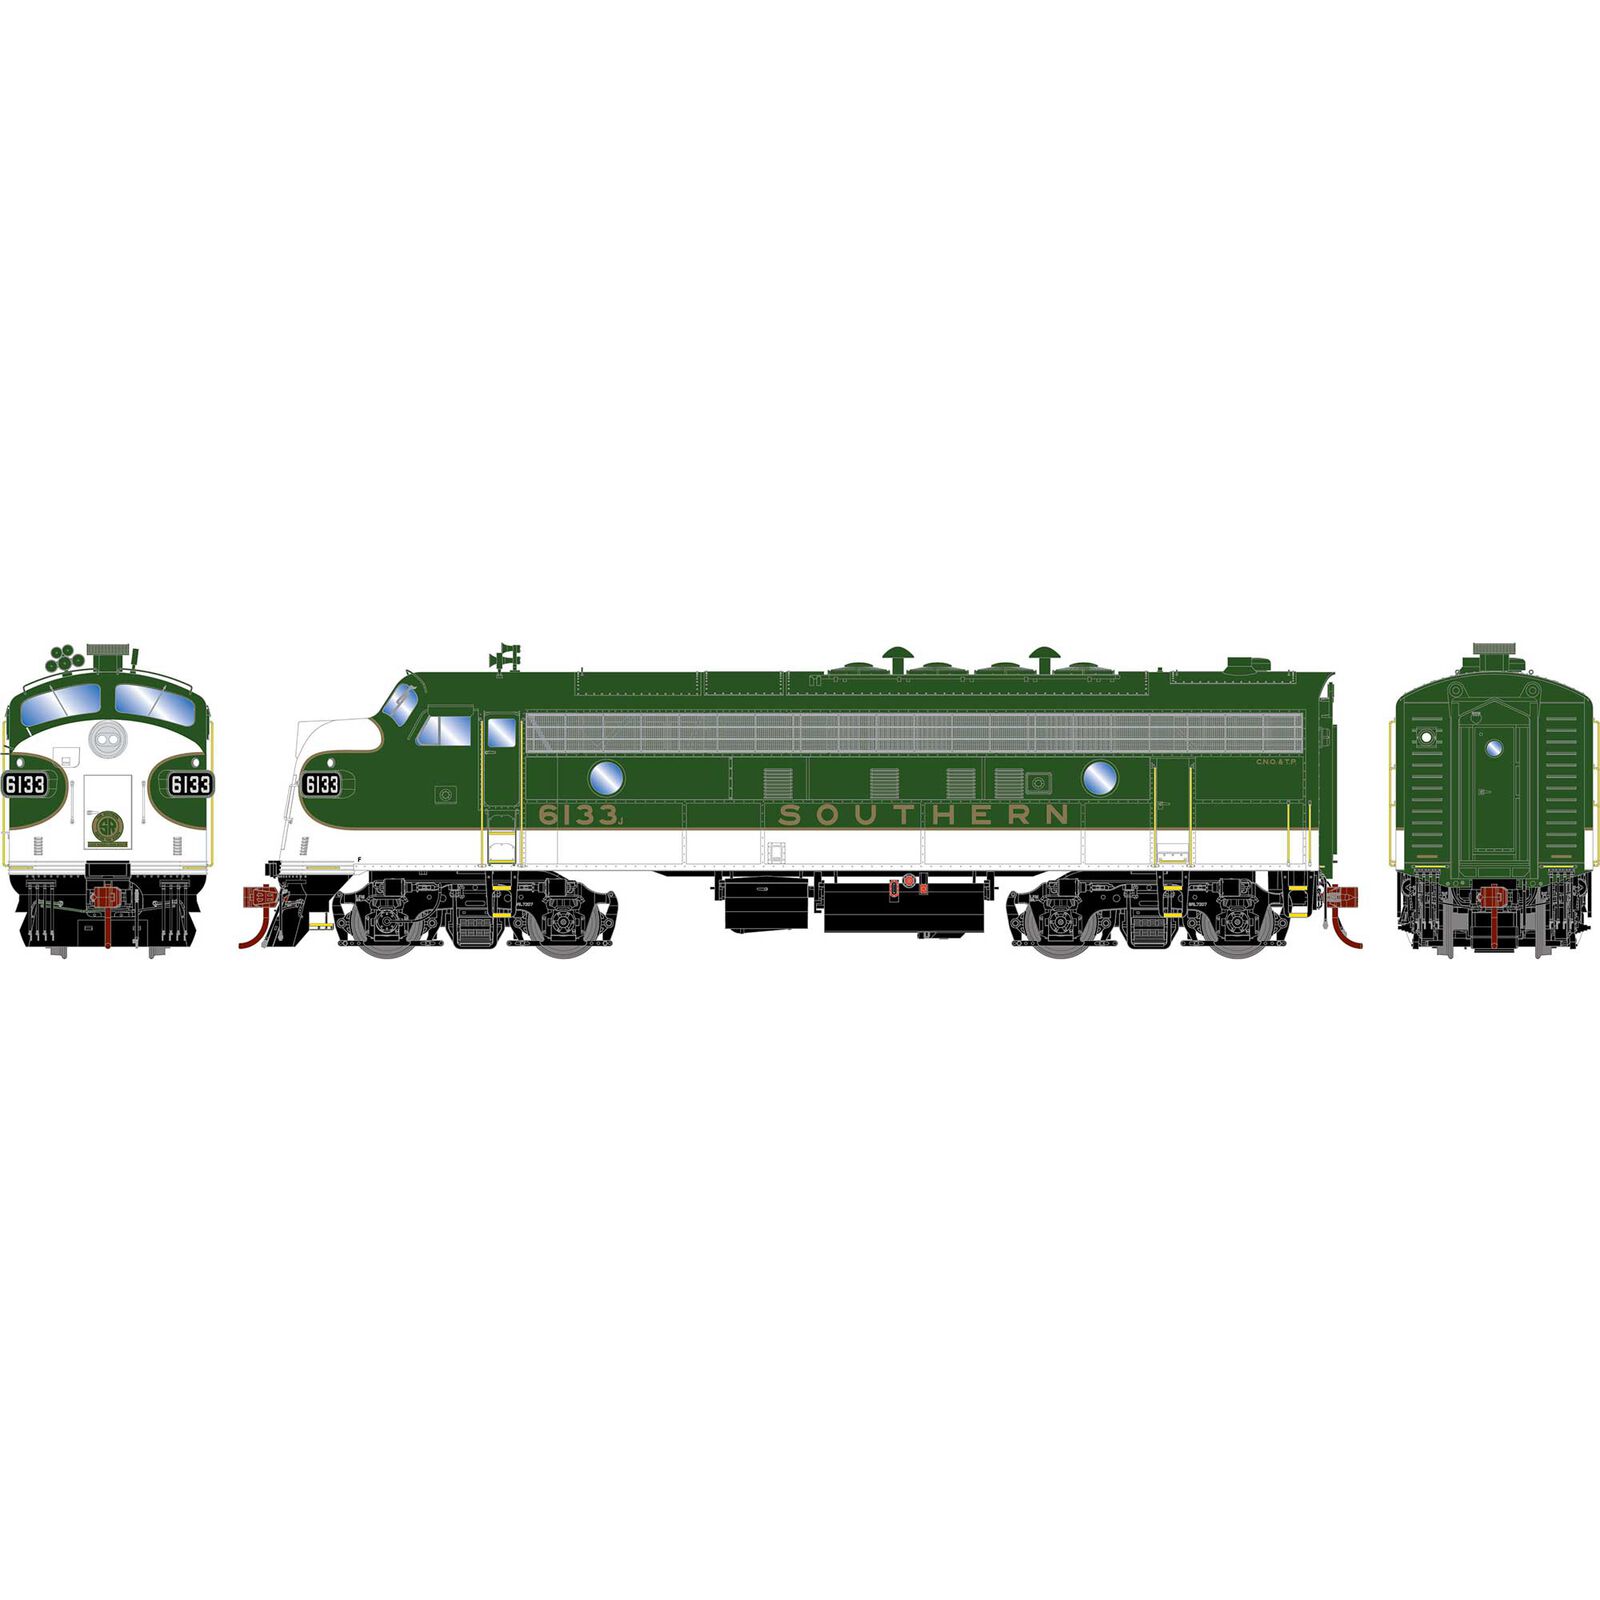 HO FP7 Locomotive with DCC & Sound, SOU #6133